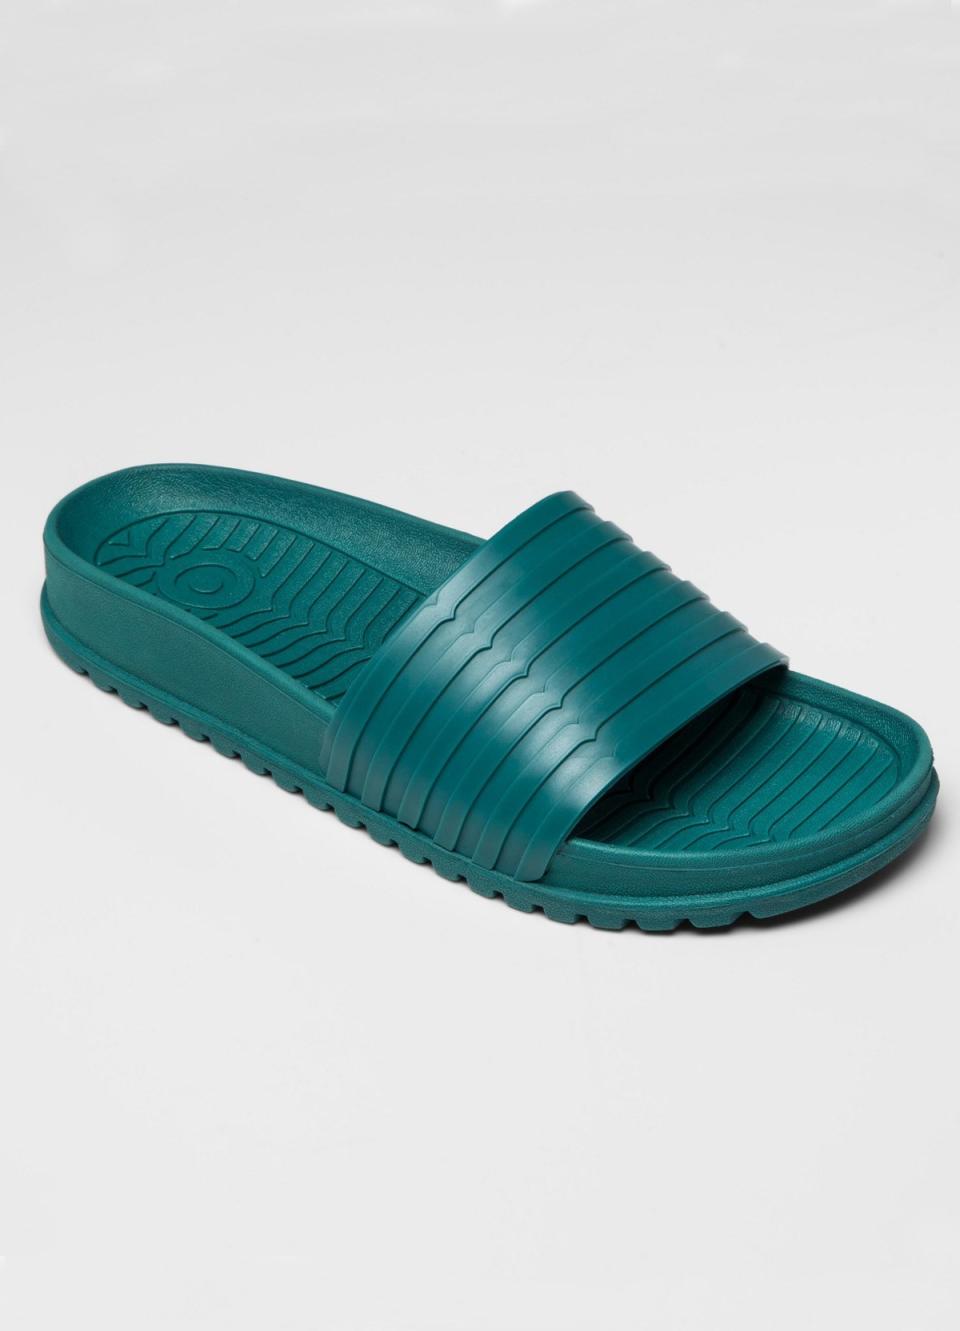 Hunter For Target Women's Slide Sandals, $25, Target